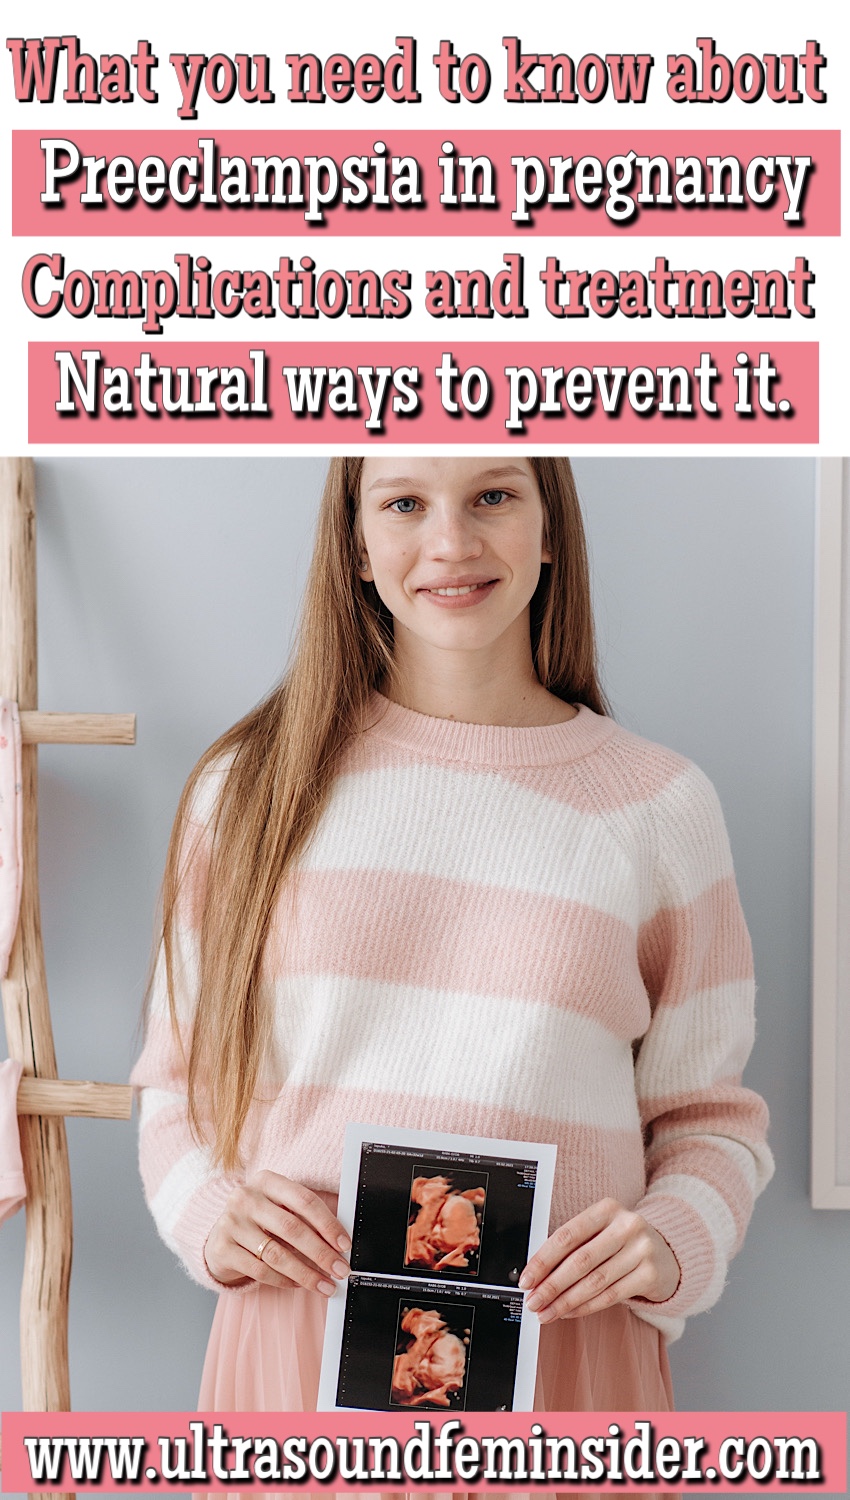 Preeclampsia in pregnancy. Natural ways to prevent it.